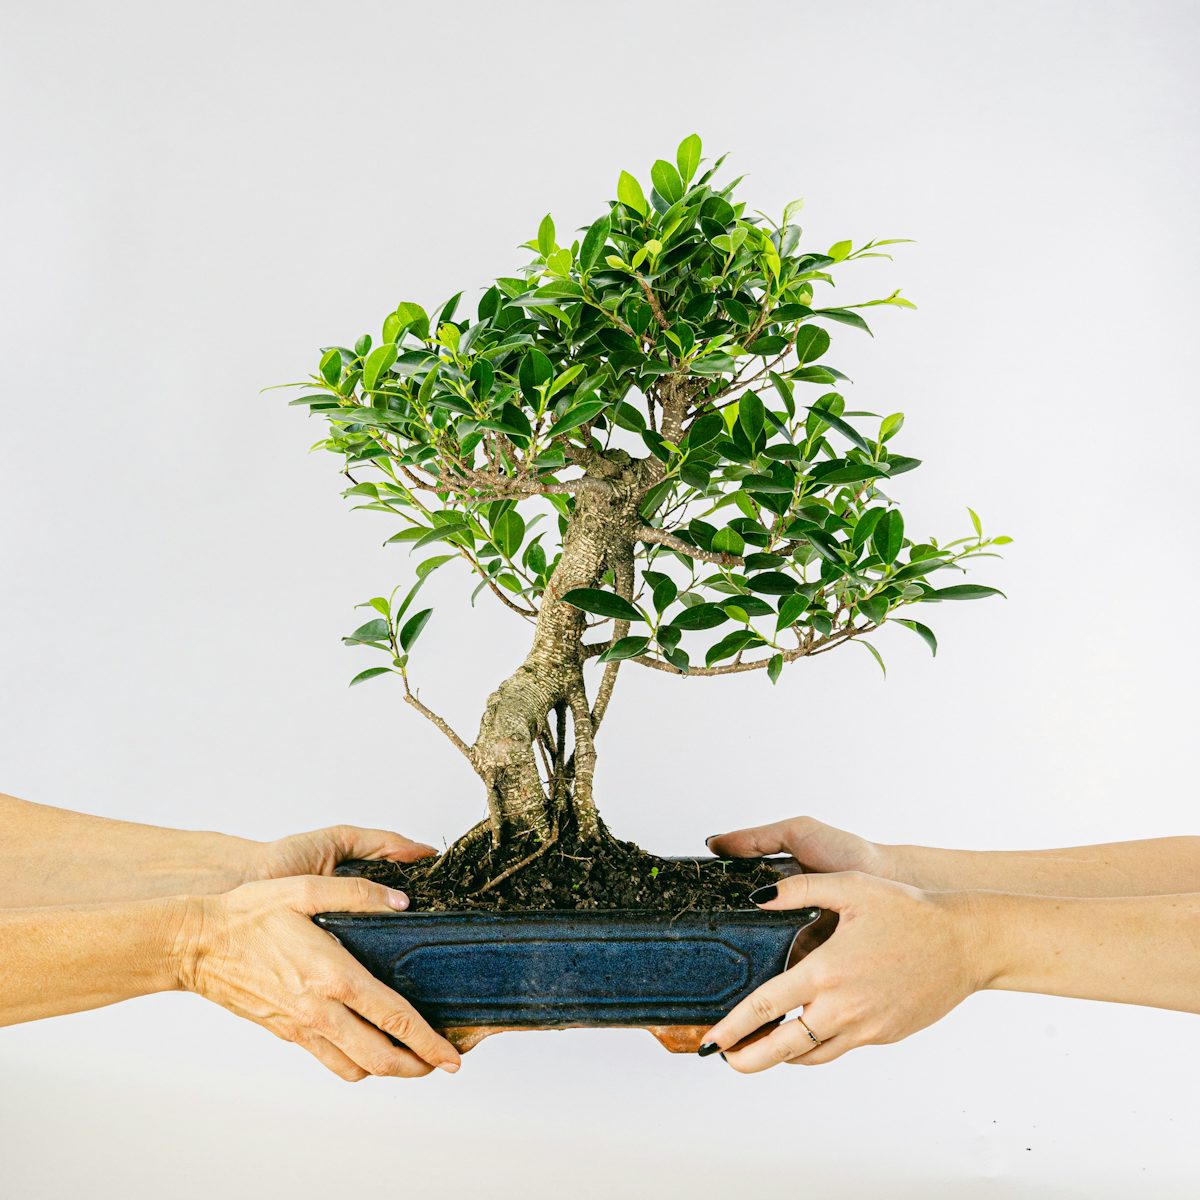 Bonsai Ficus retusa 16 anni